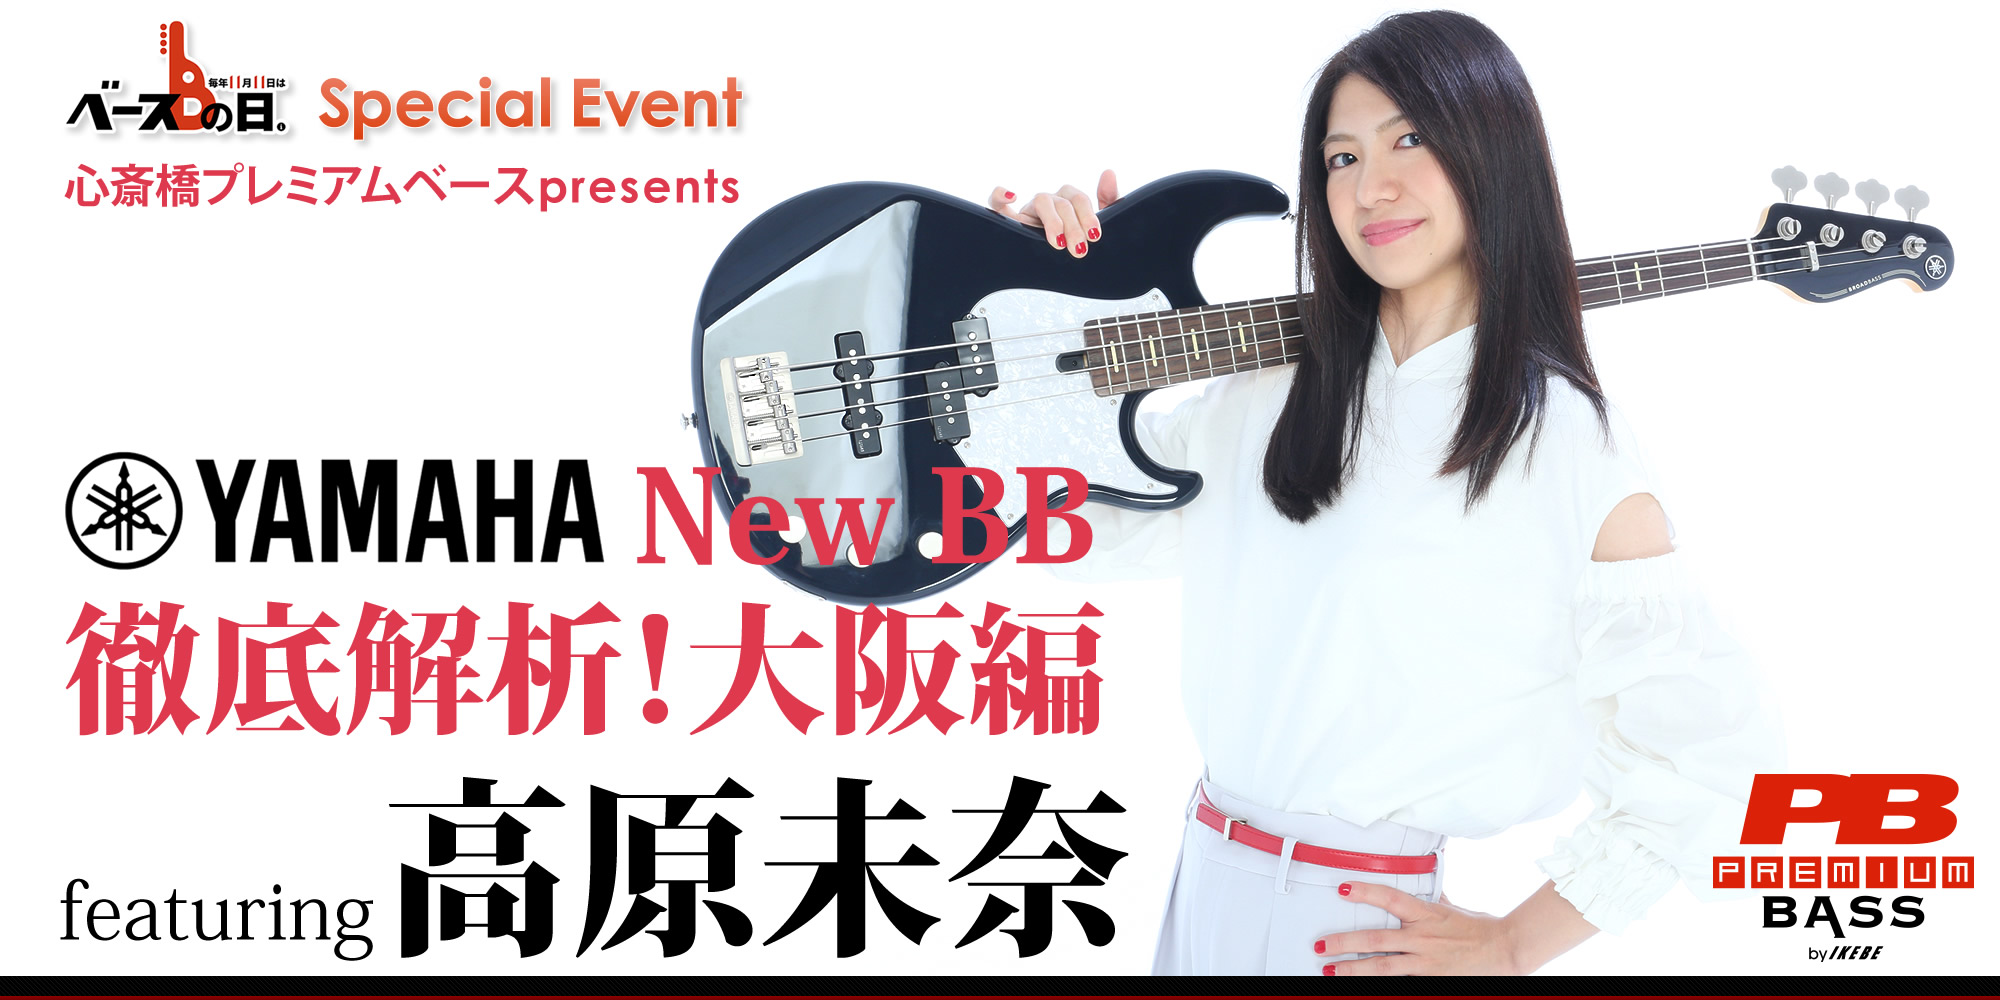 Premium Bass Presents ｢YAMAHA New BB徹底解析！大阪編｣  featuring 高原未奈